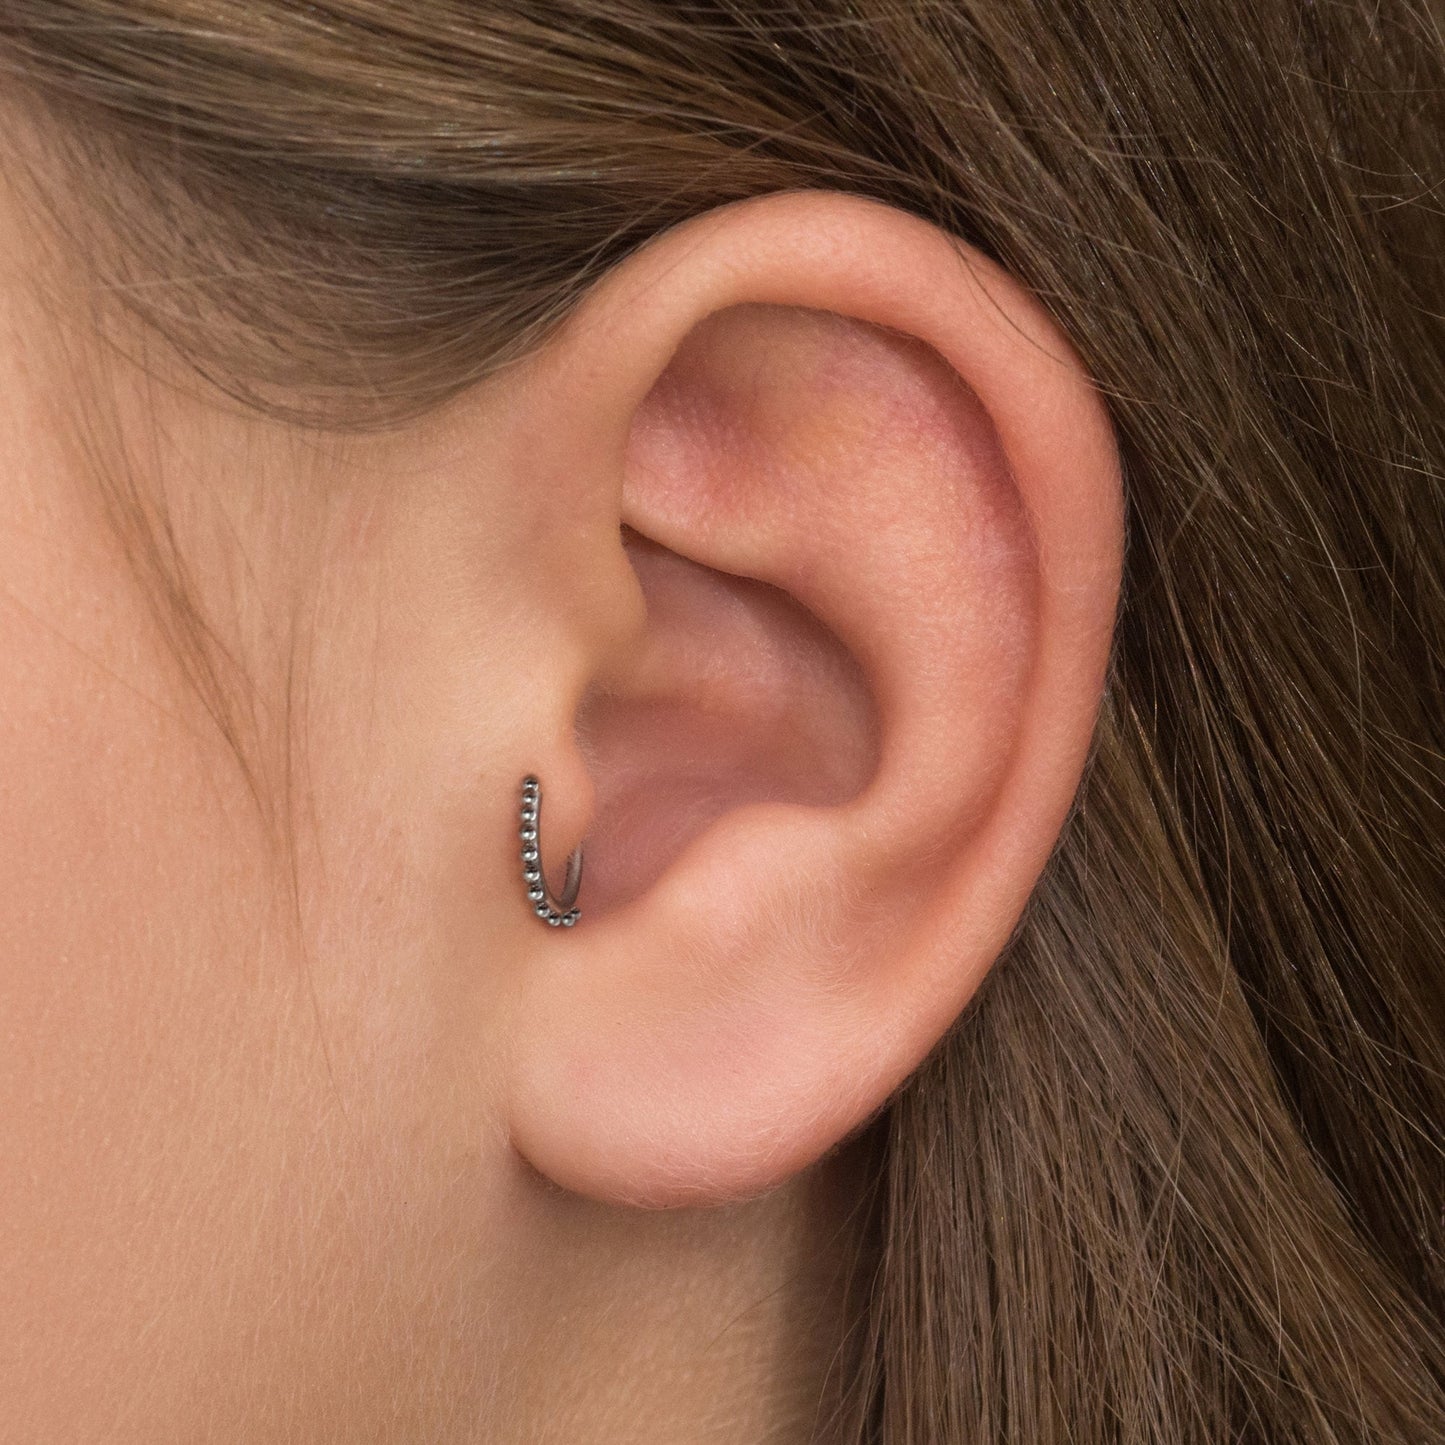 Rook Earring Surgical Steel - TitaniumFashion